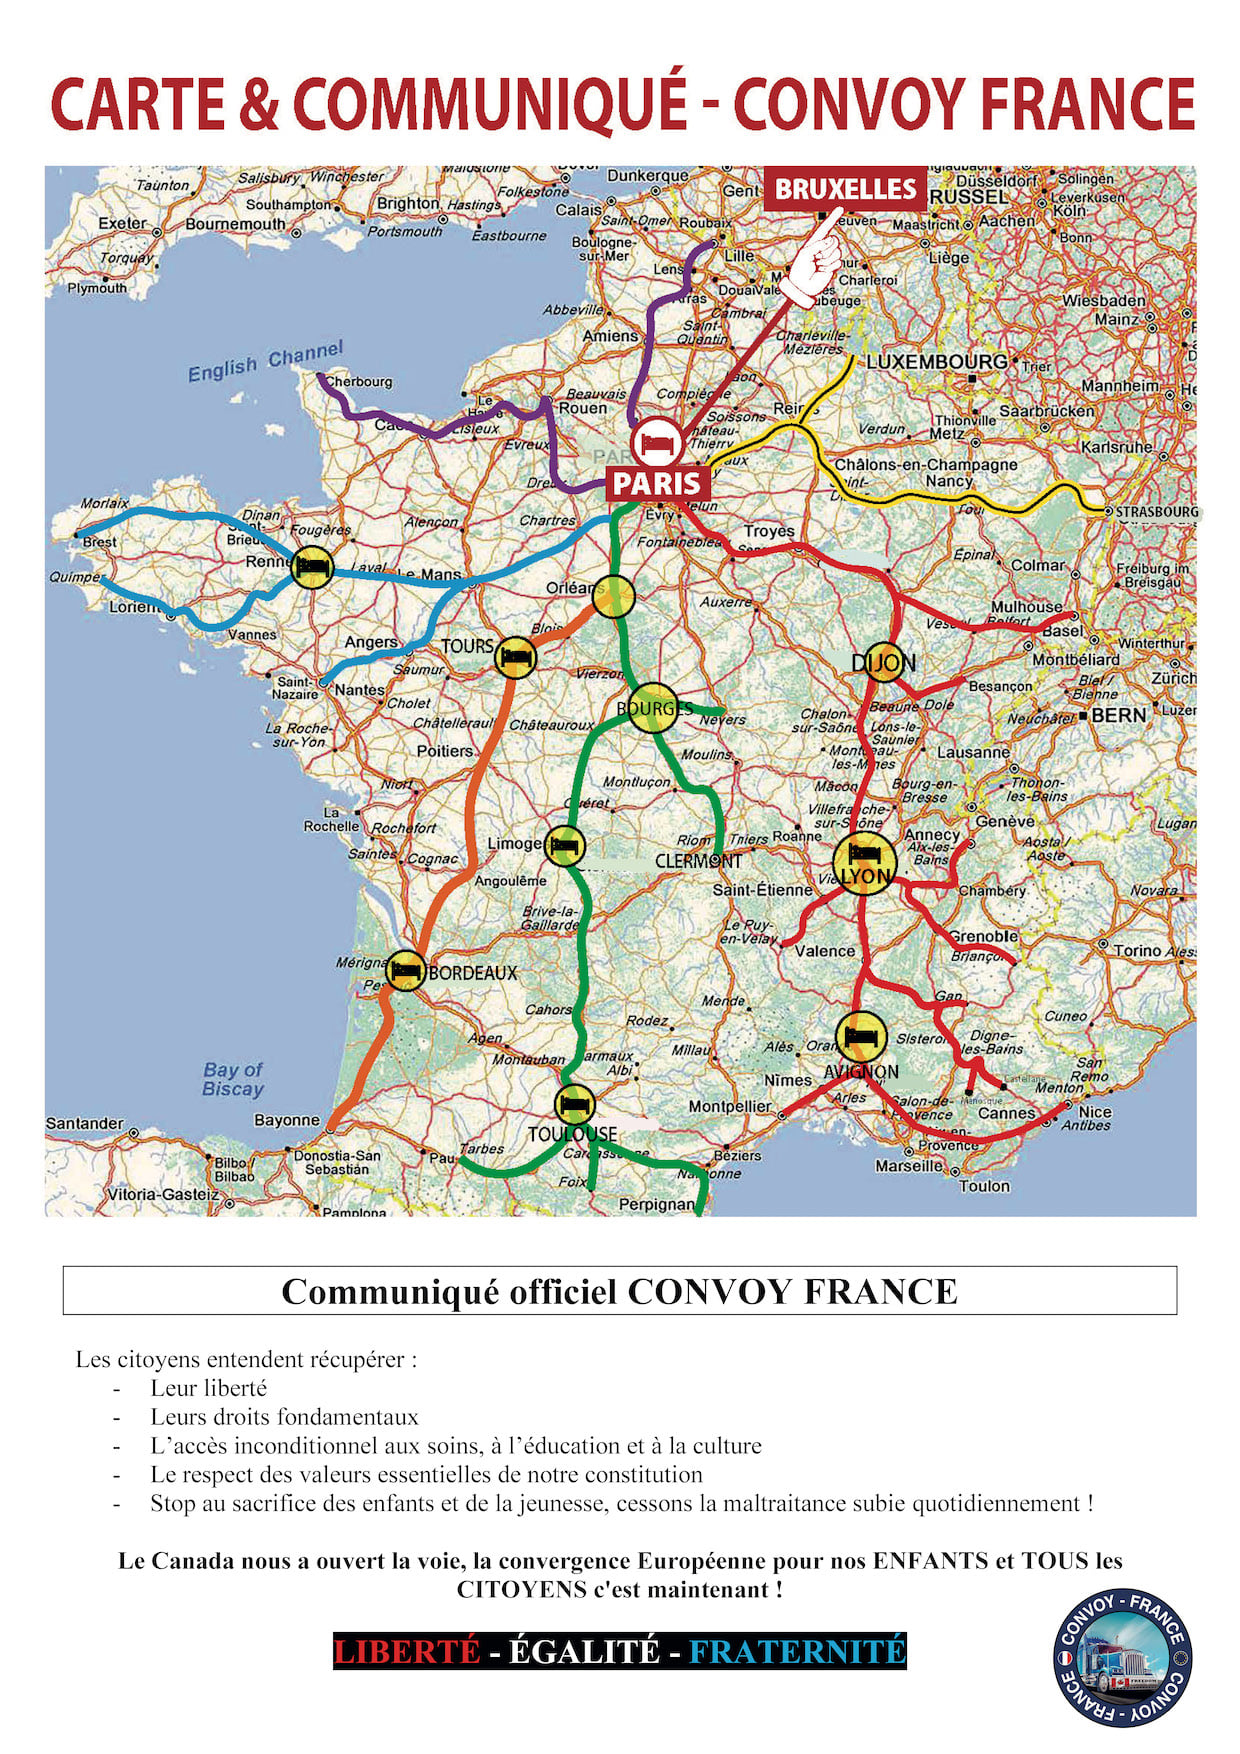 Convoy France